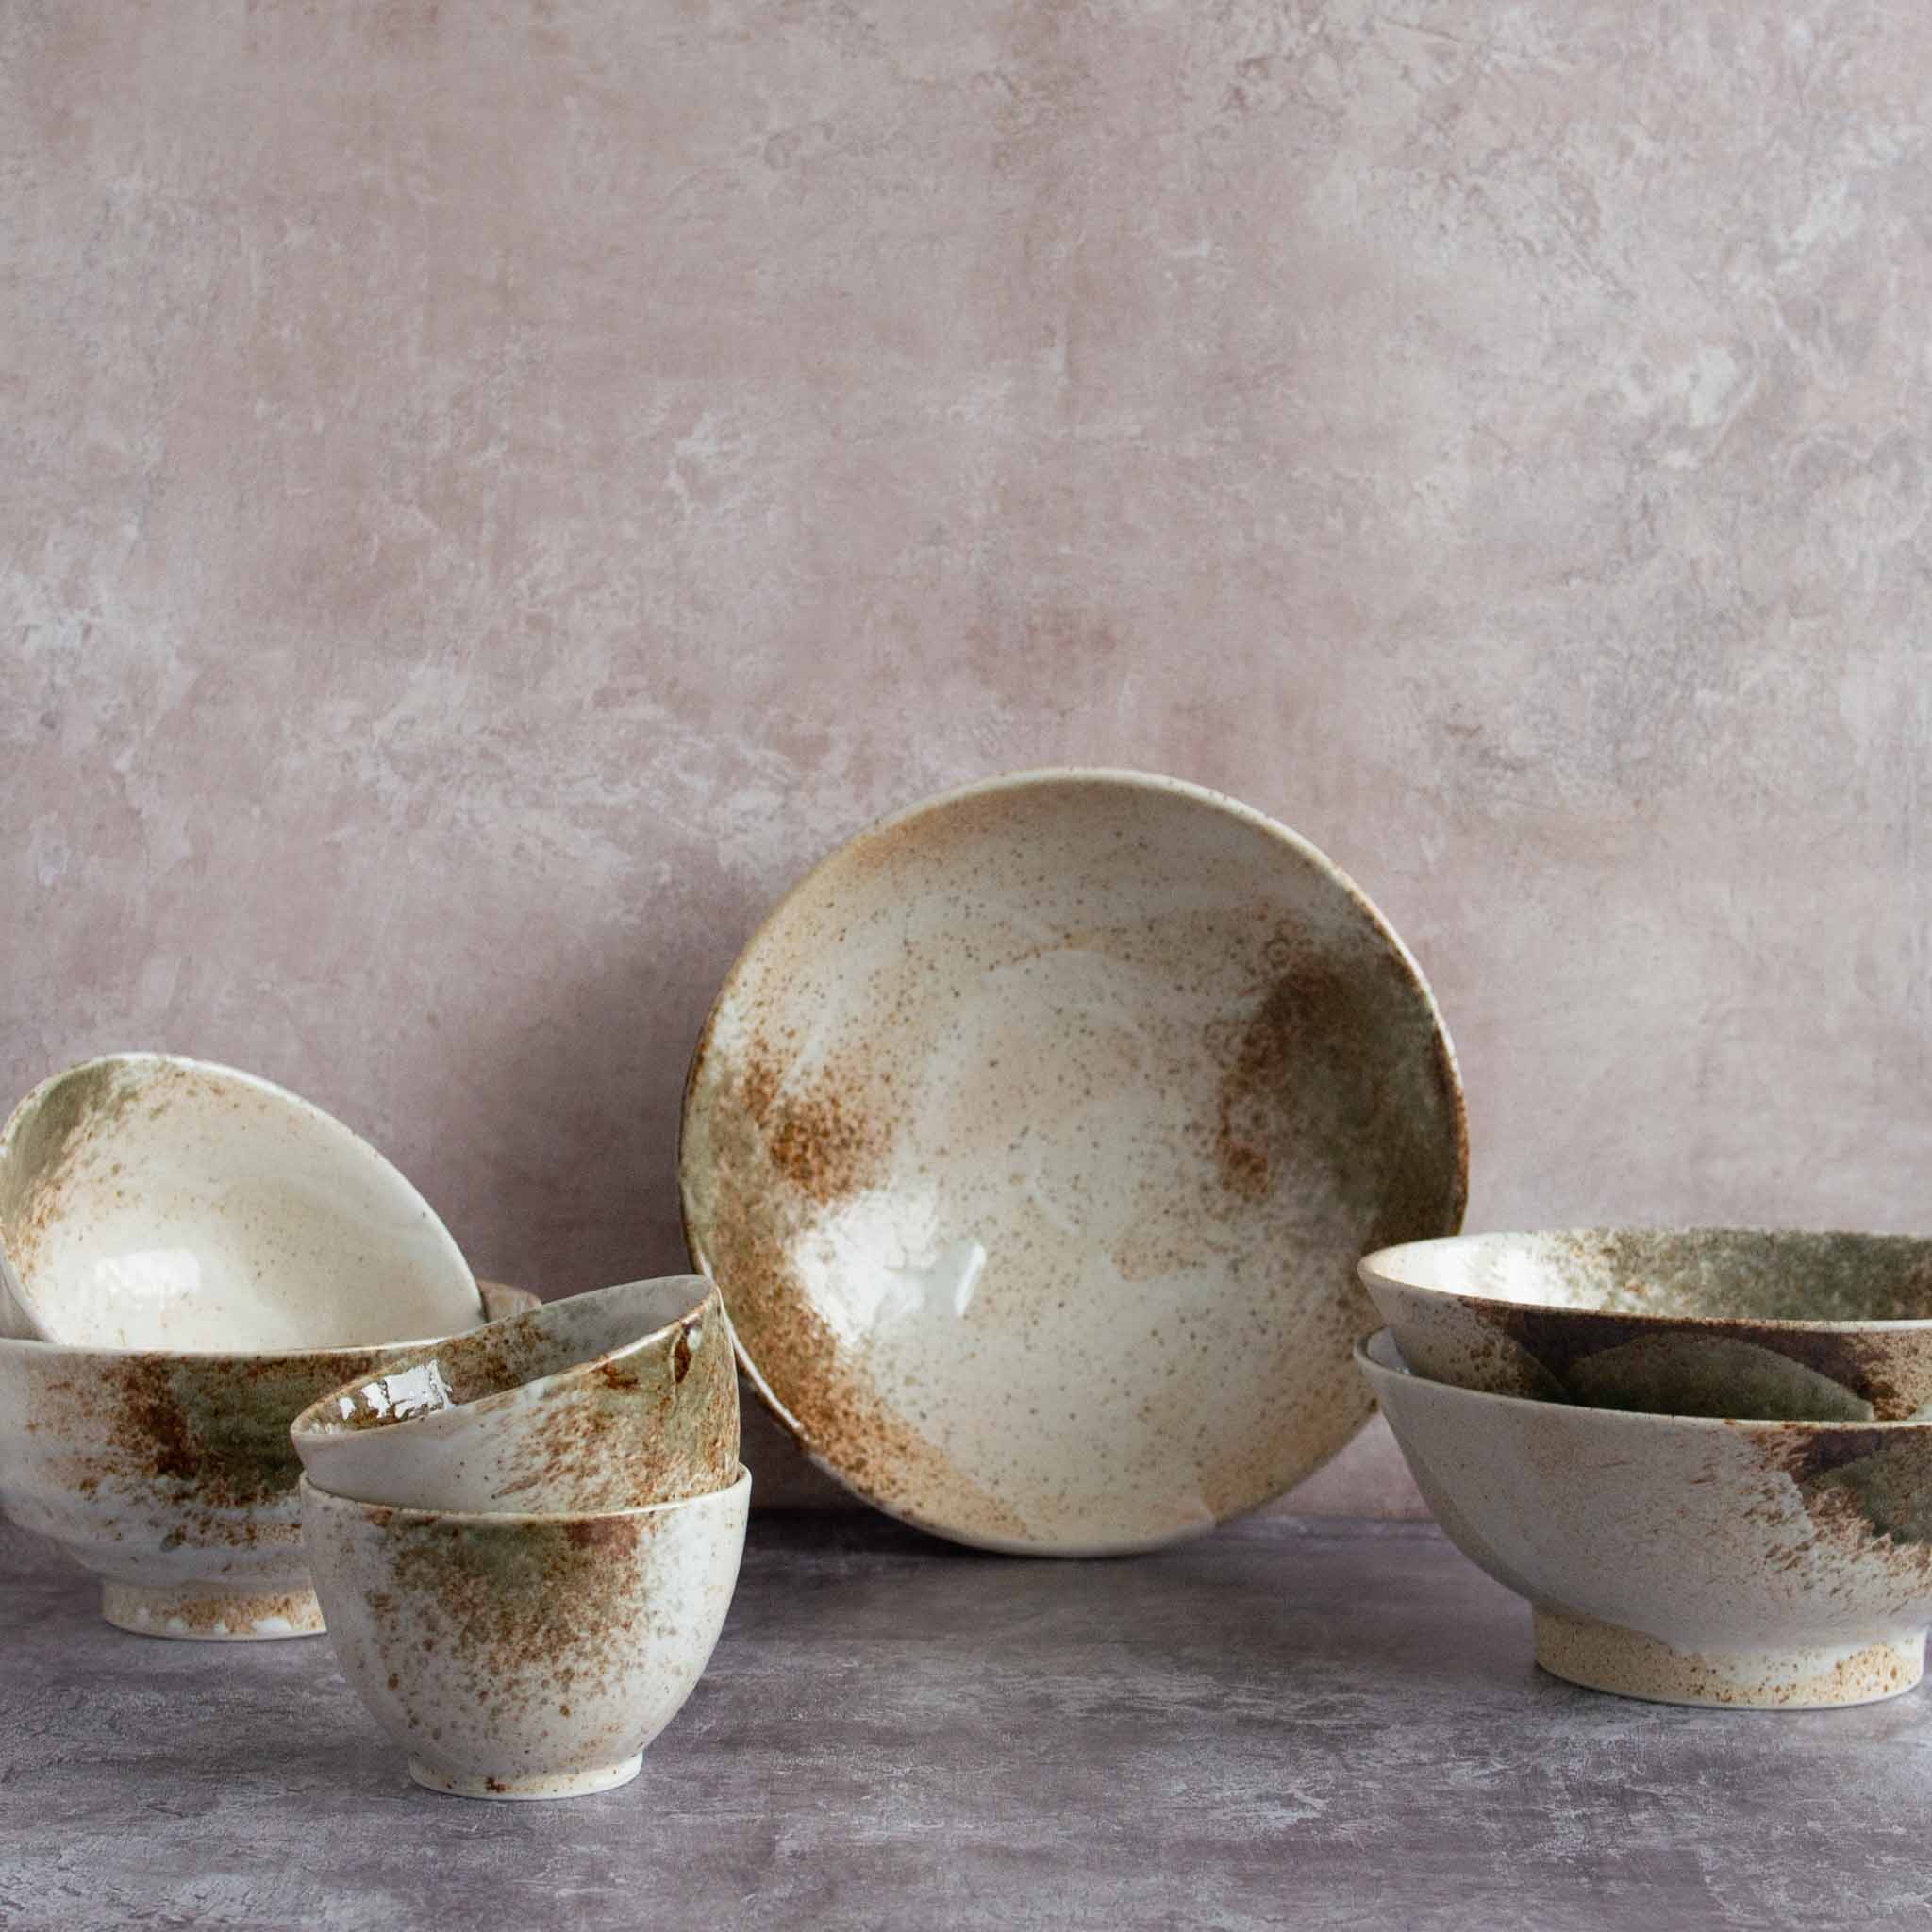 Kiji Stoneware & Ceramics Small Yukishino Ramen Bowl Tableware Ramen Bowls Japanese Food